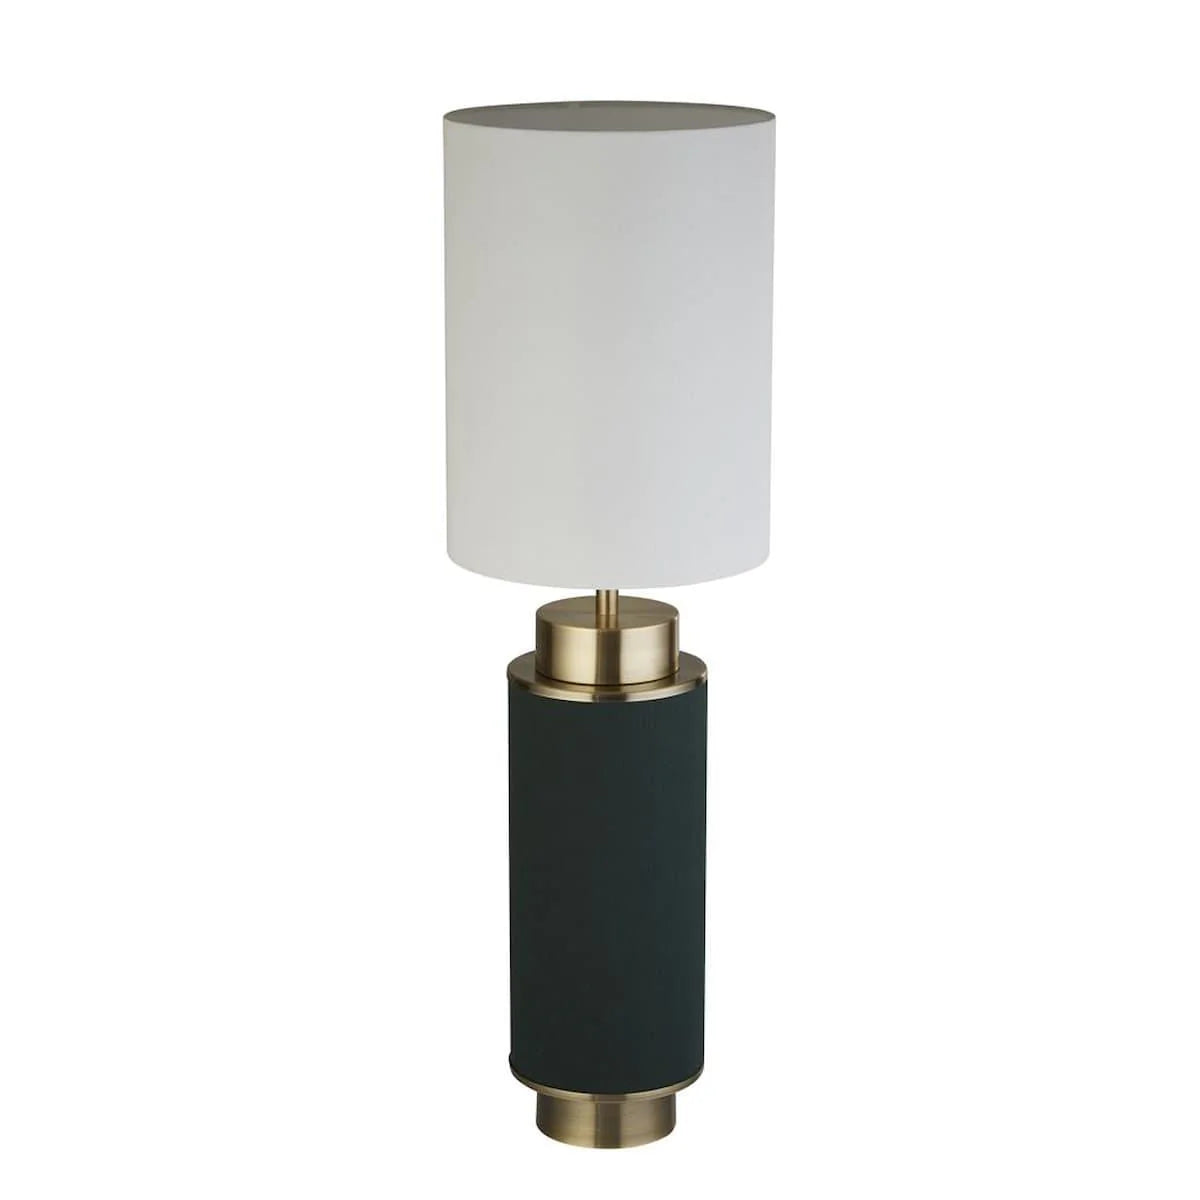 FLASK TABLE LAMP - DARK GREEN & ANTIQUE BRASS, WHITE SHADE 59041AB - Peter Murphy Lighting & Electrical Ltd